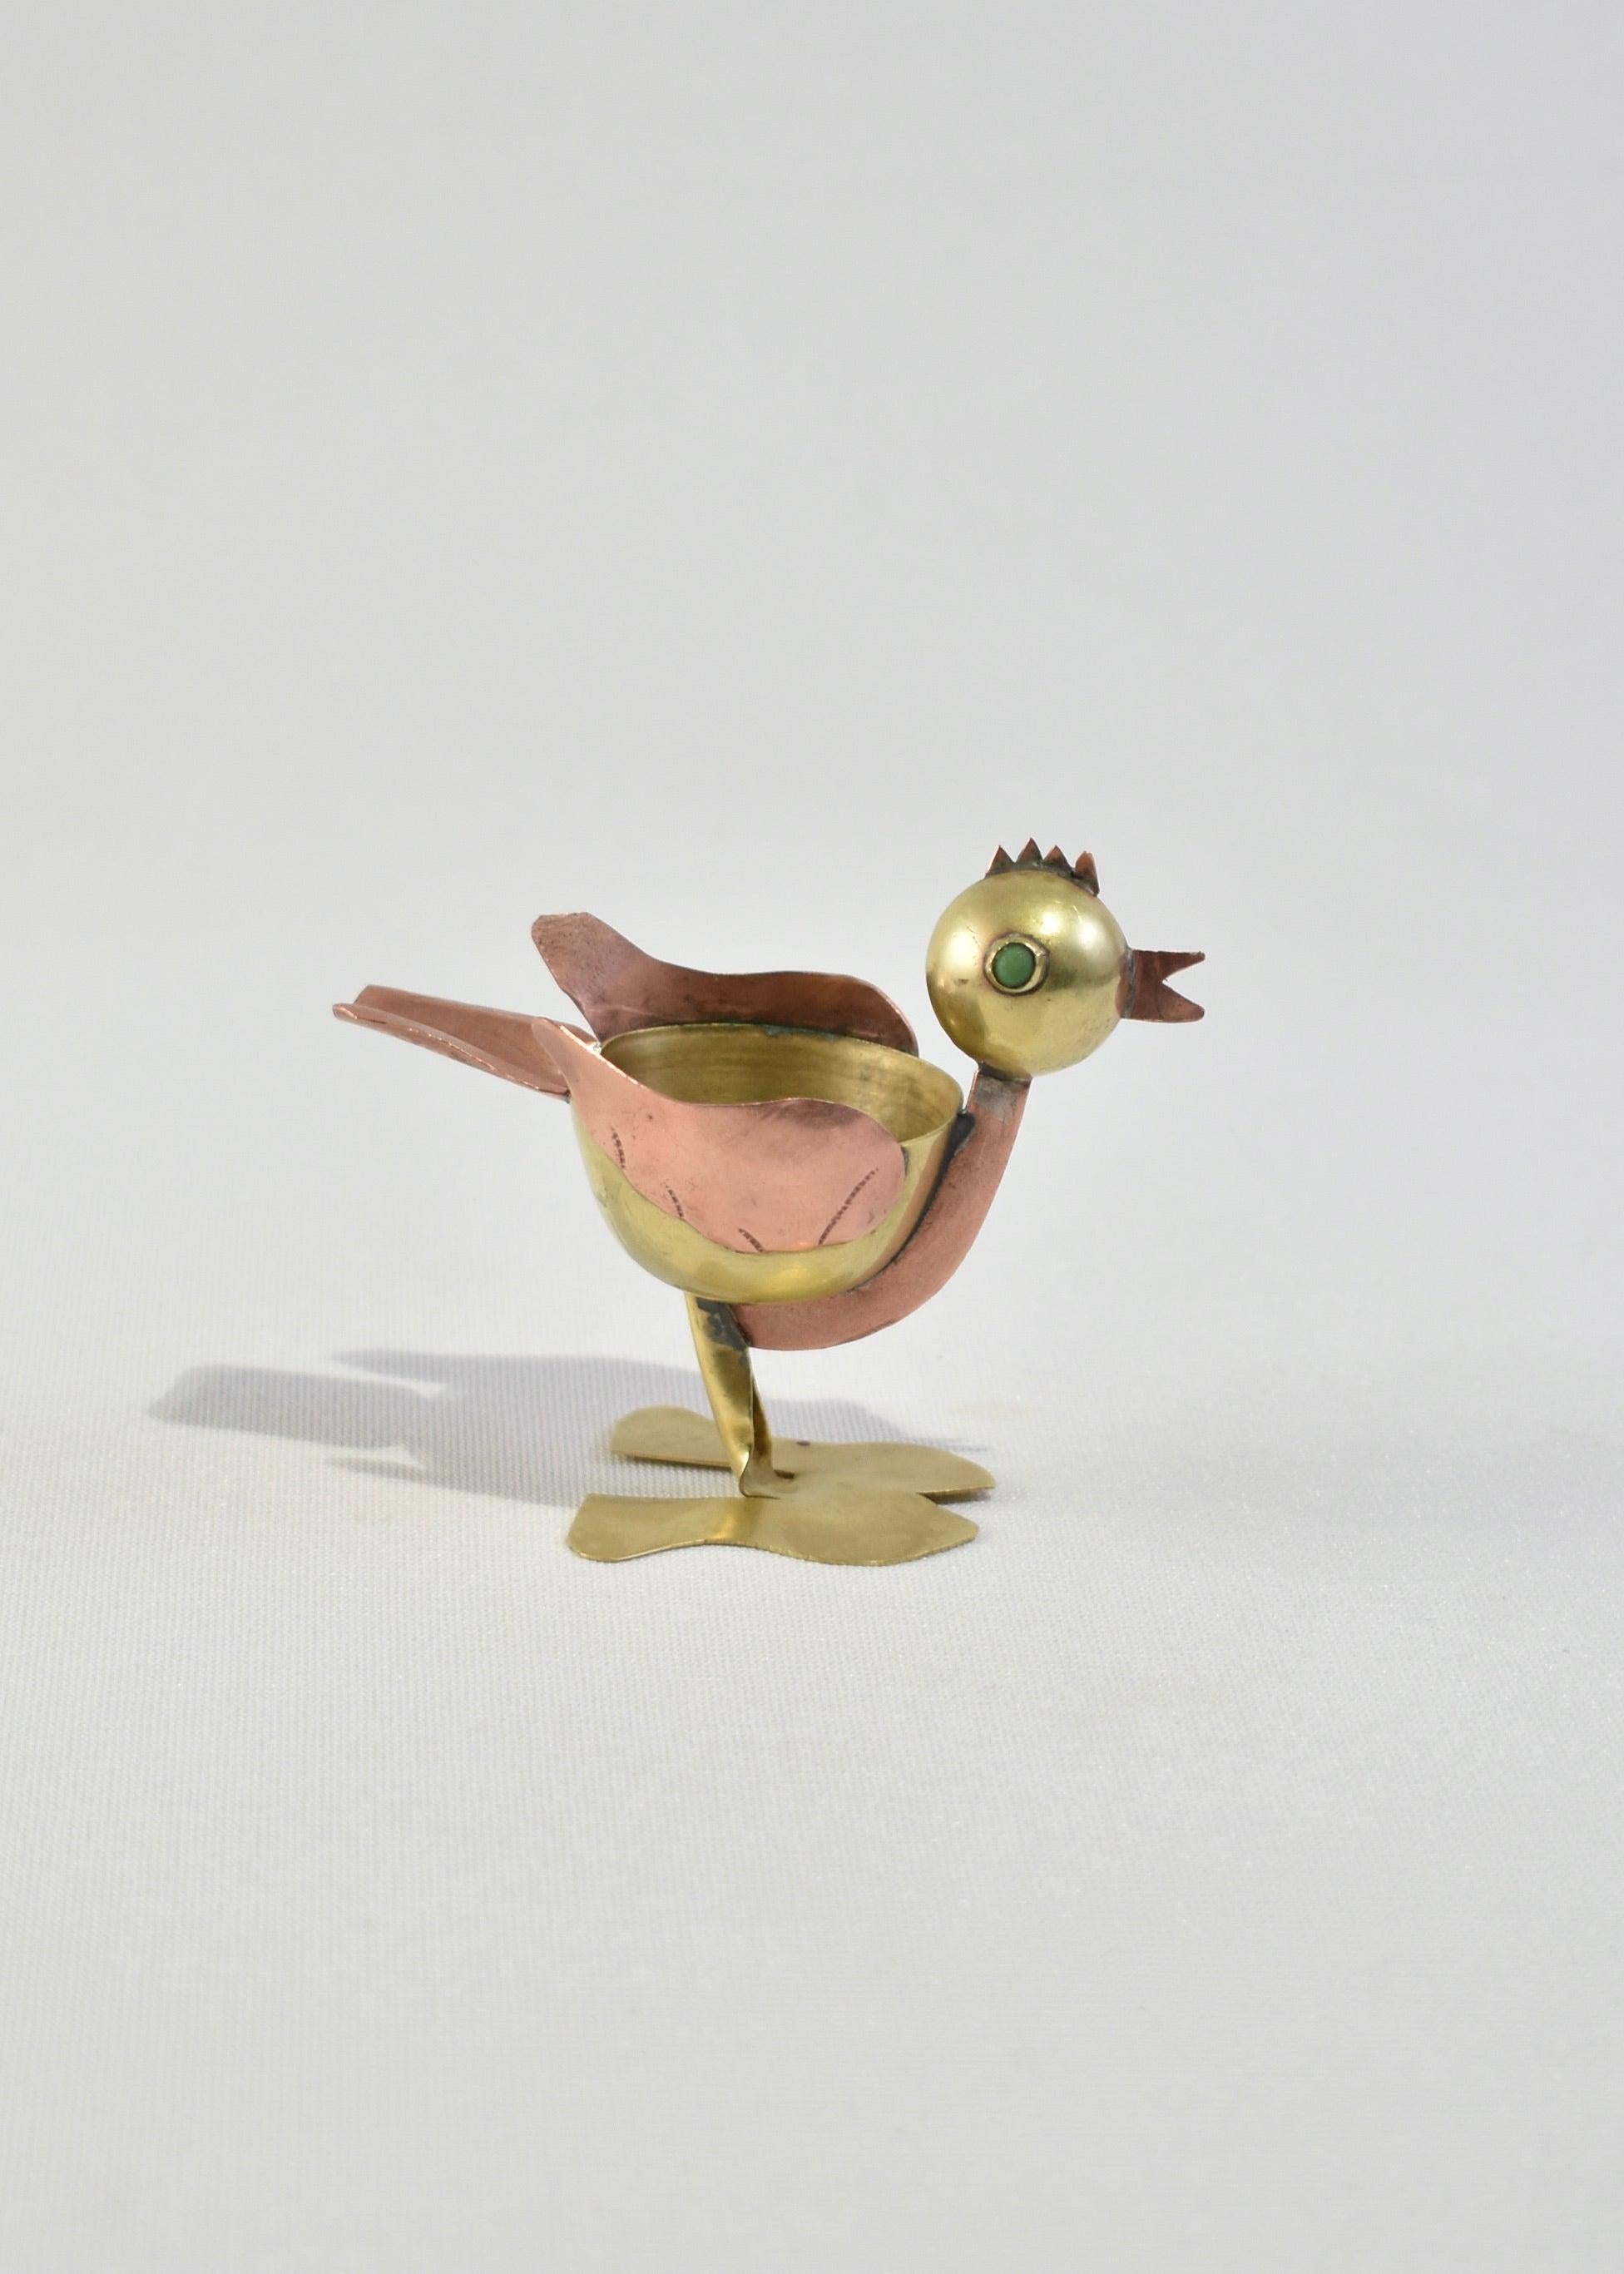 Stunning handmade petite copper and brass bird ashtray with stone eye detail.